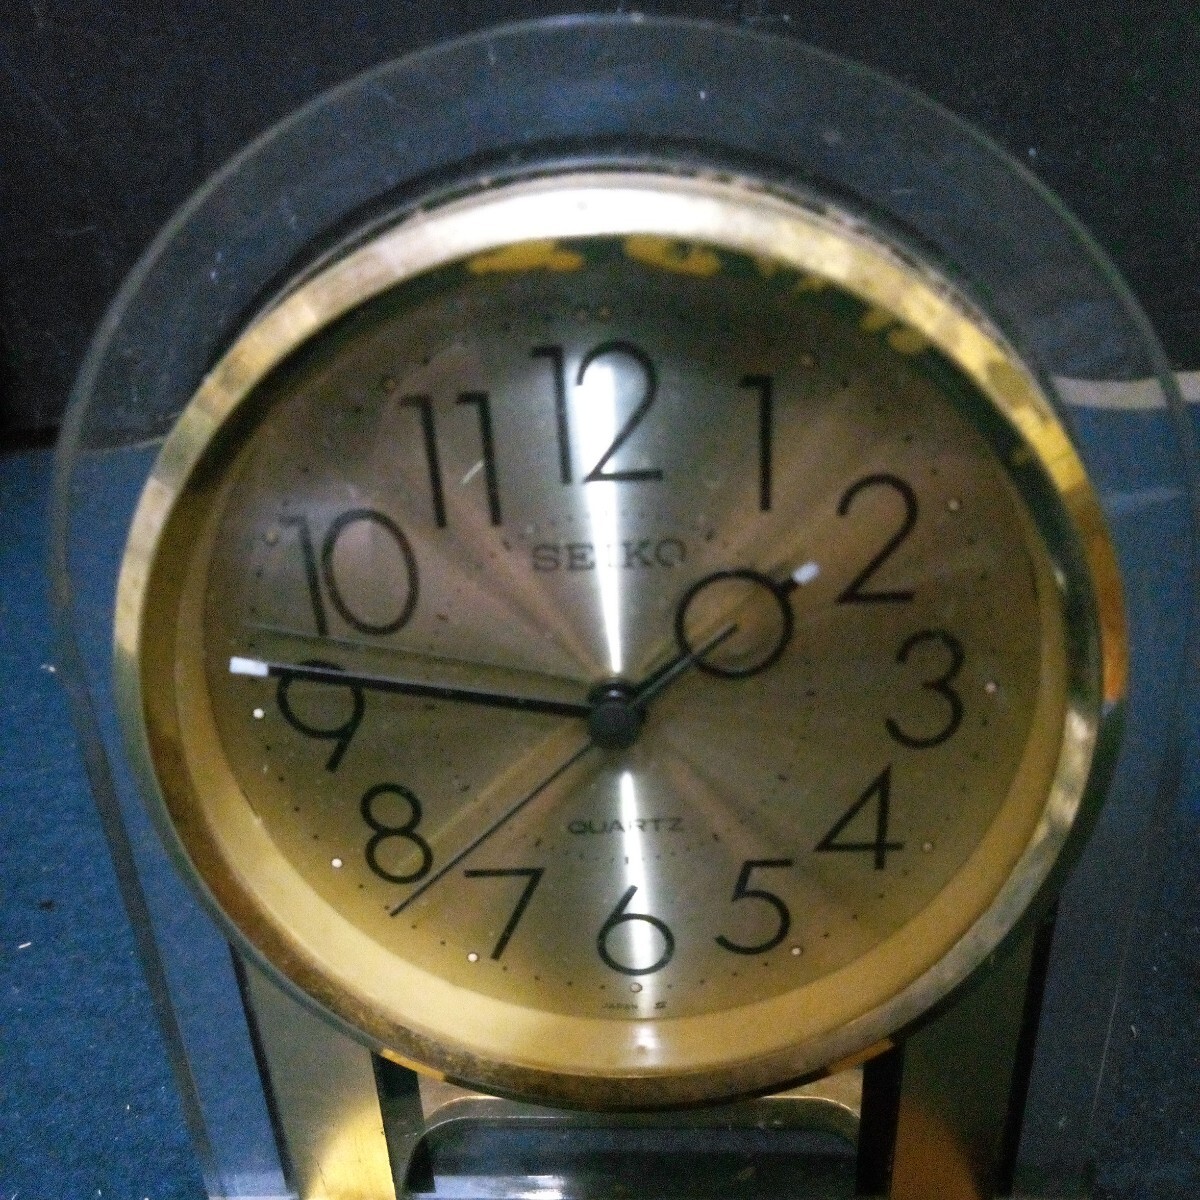 SEIKO セイコー 置時計 目覚まし時計 卓上時計 「QP345D」 クォーツ アナログ 電池式 約13×11cm 厚さ約6cm 動作確認済み_画像2